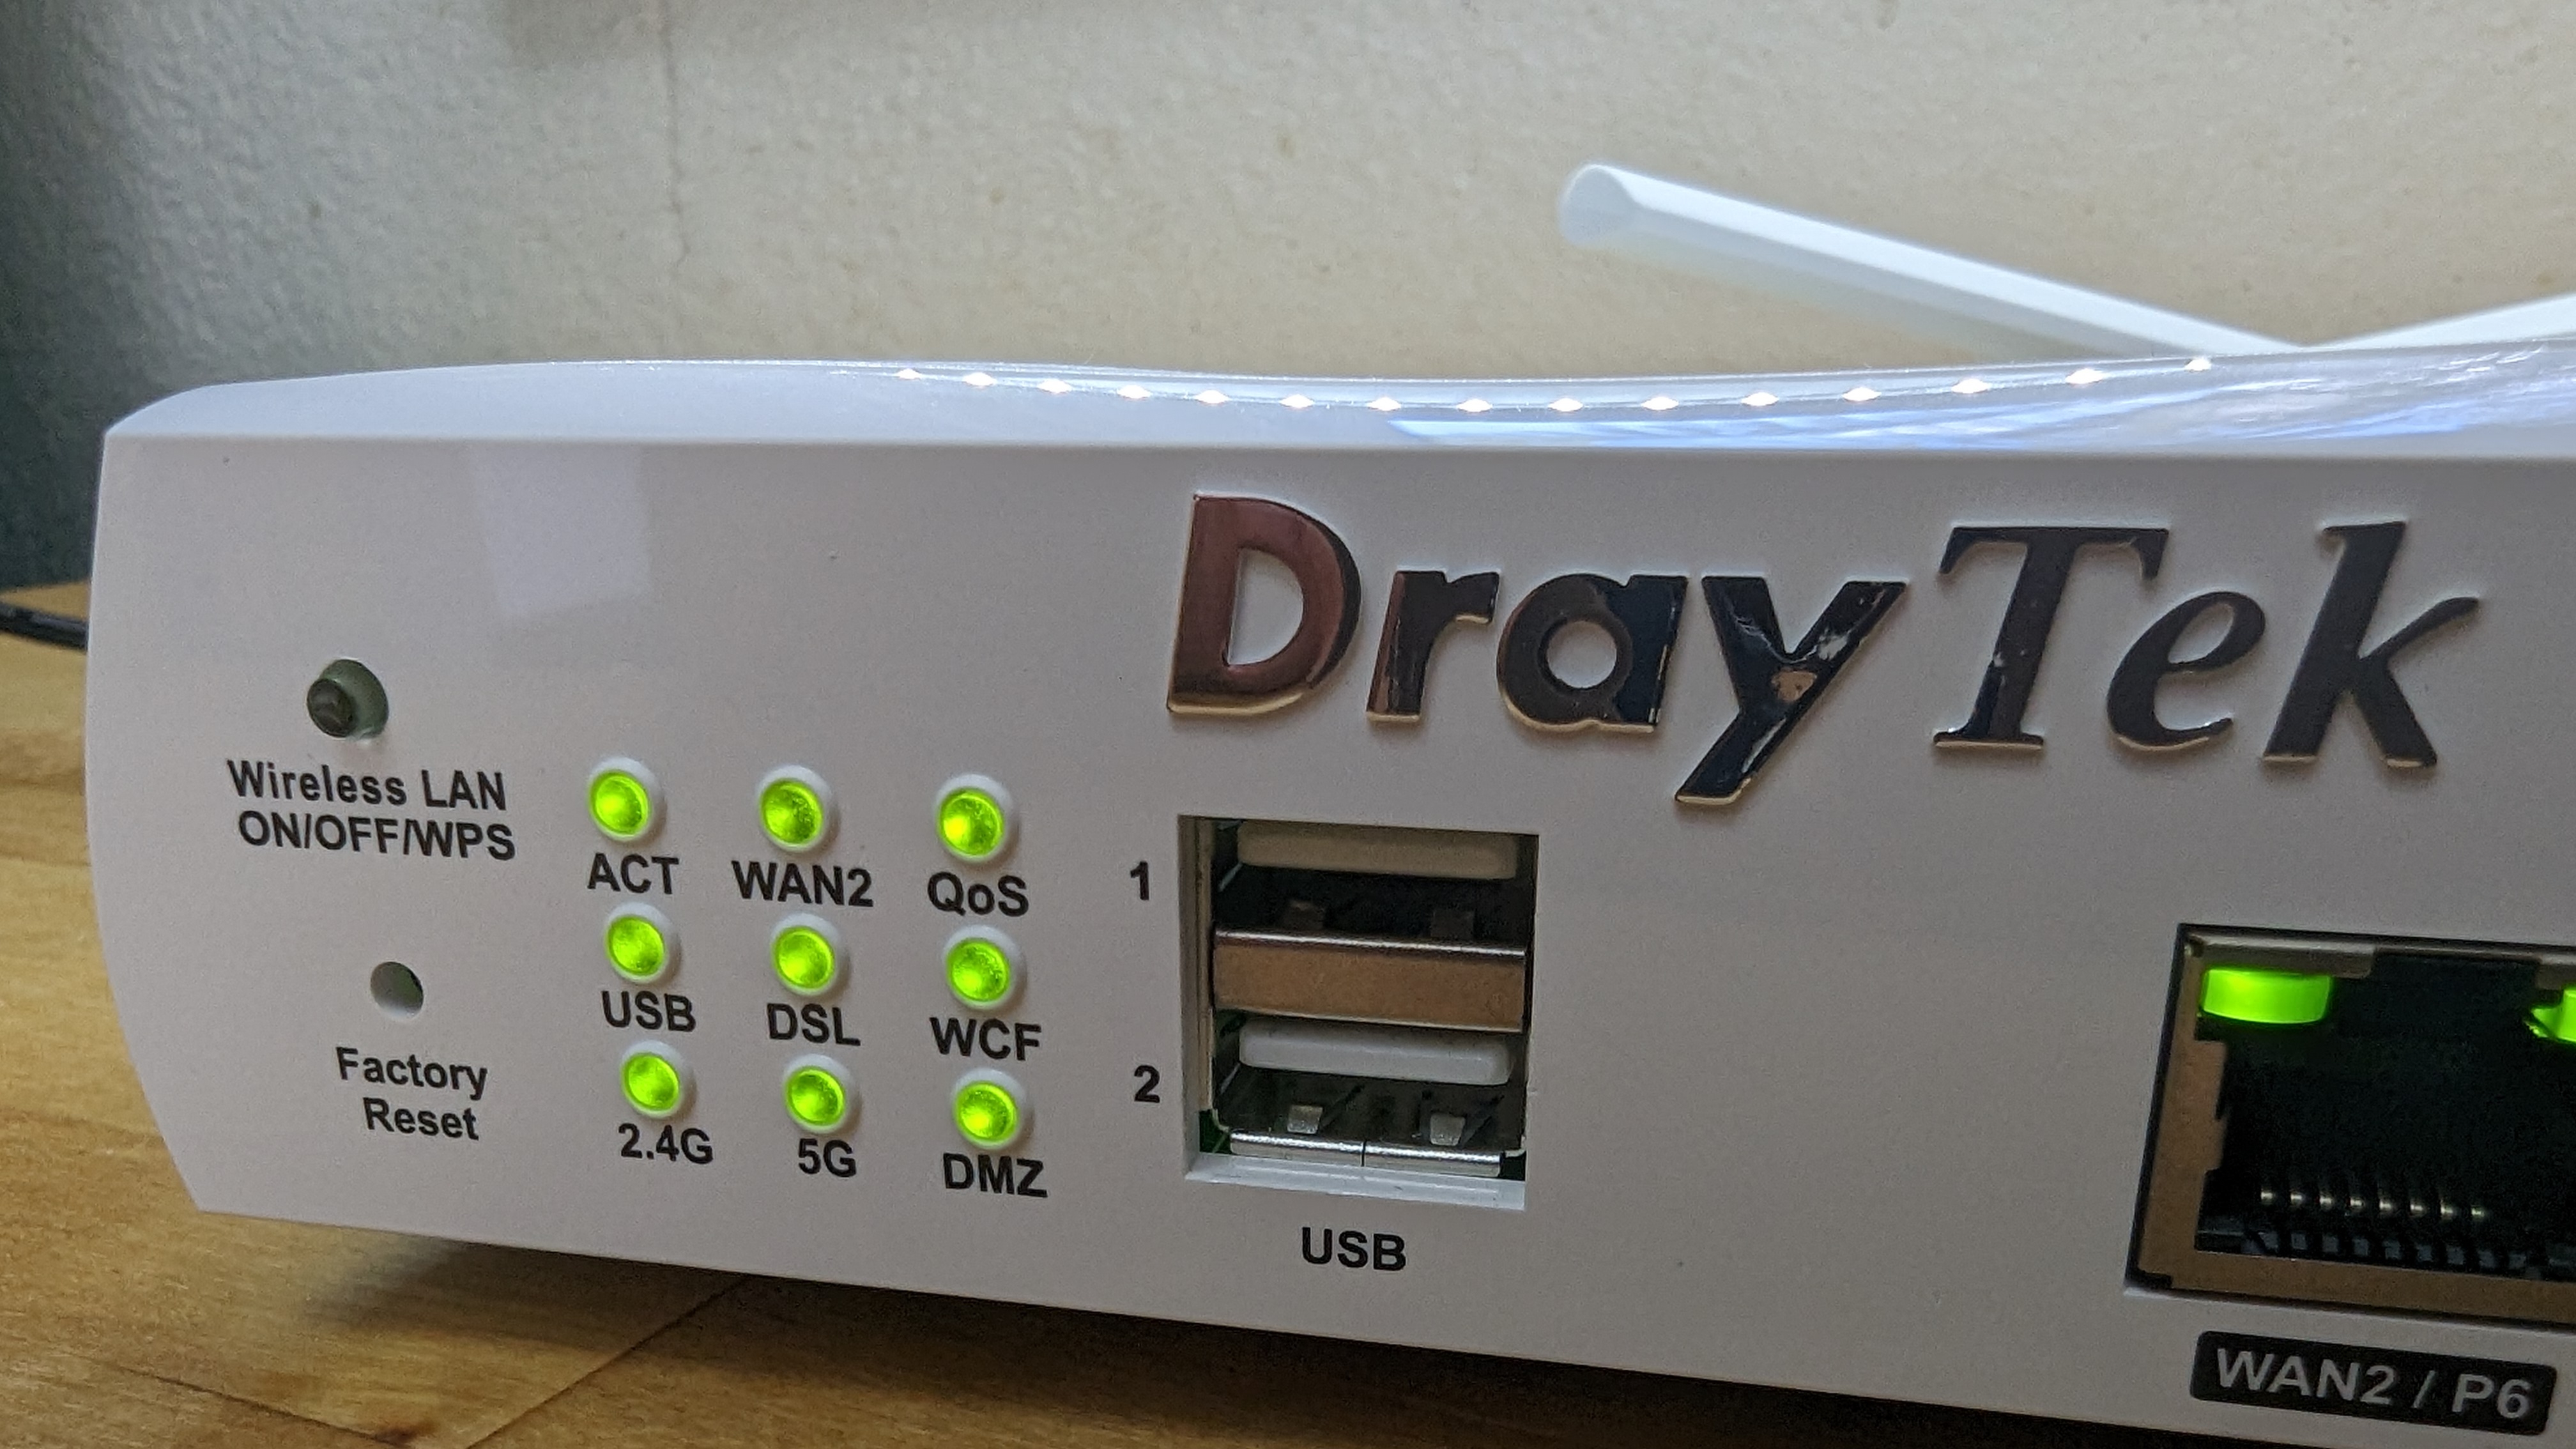 Dual USB ports and light indicators on the DrayTek Vigor2865ax